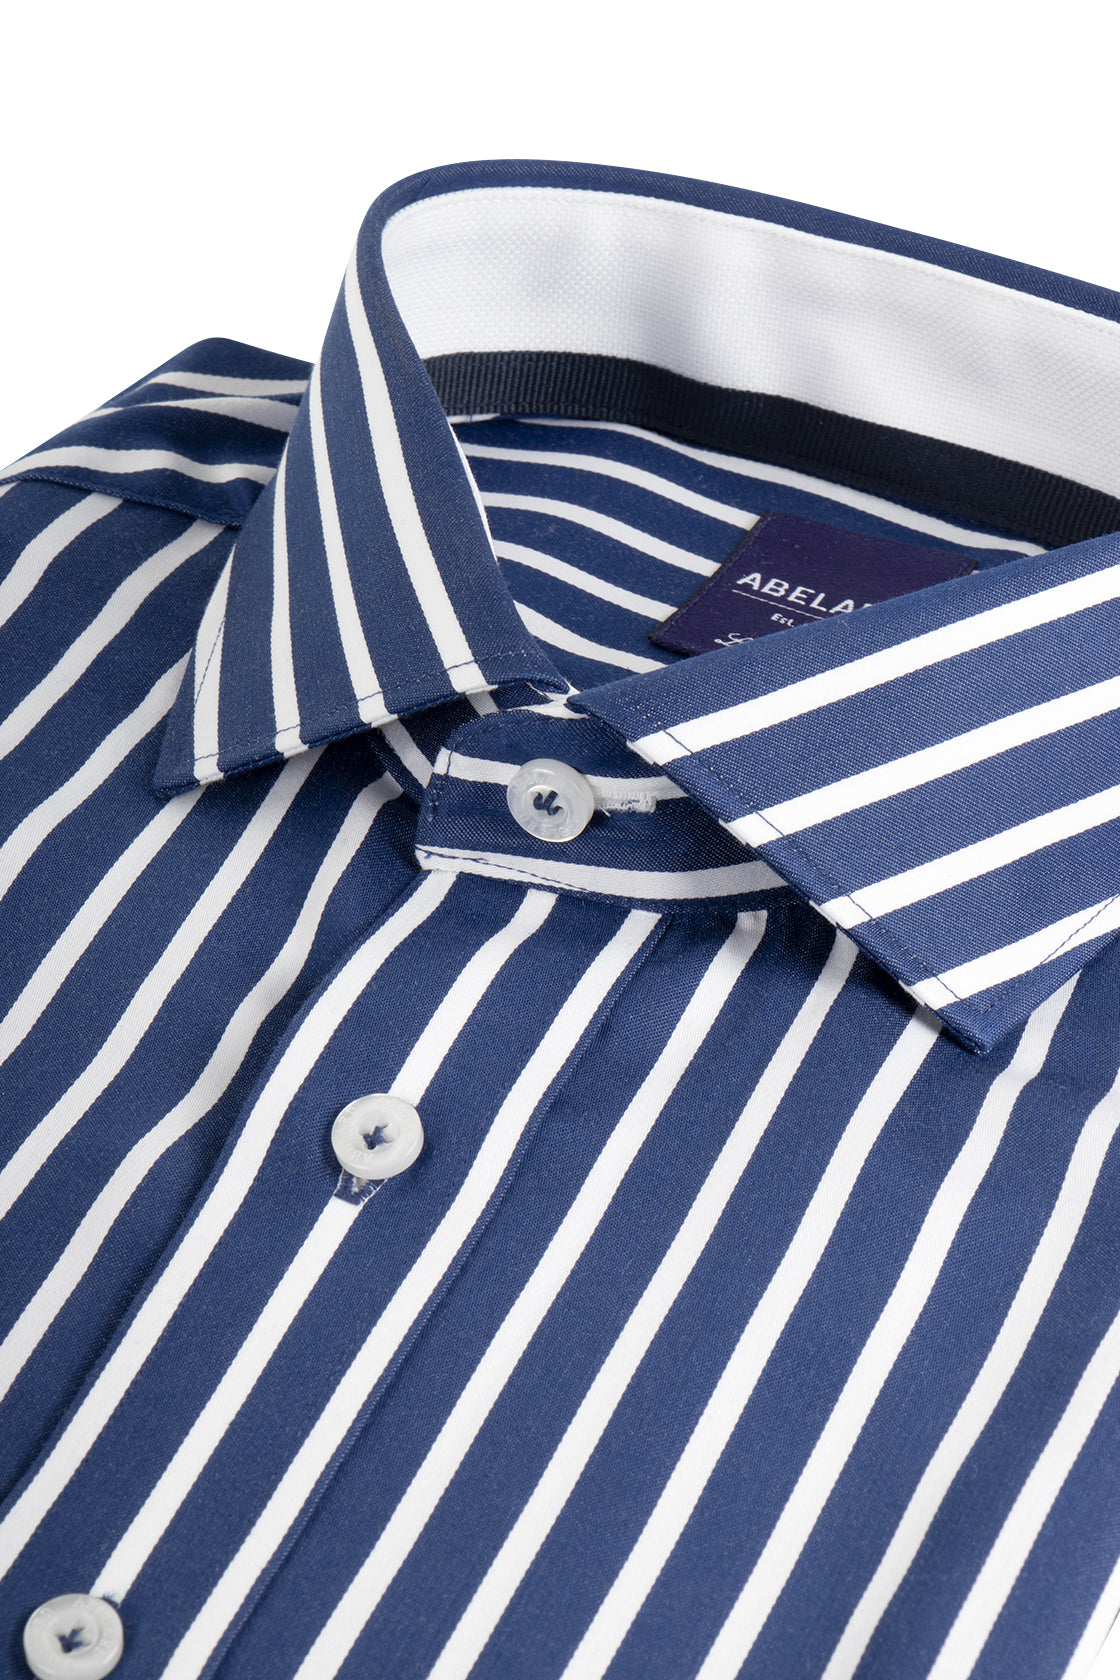 Abelard Stripe Classic Shirt Navy